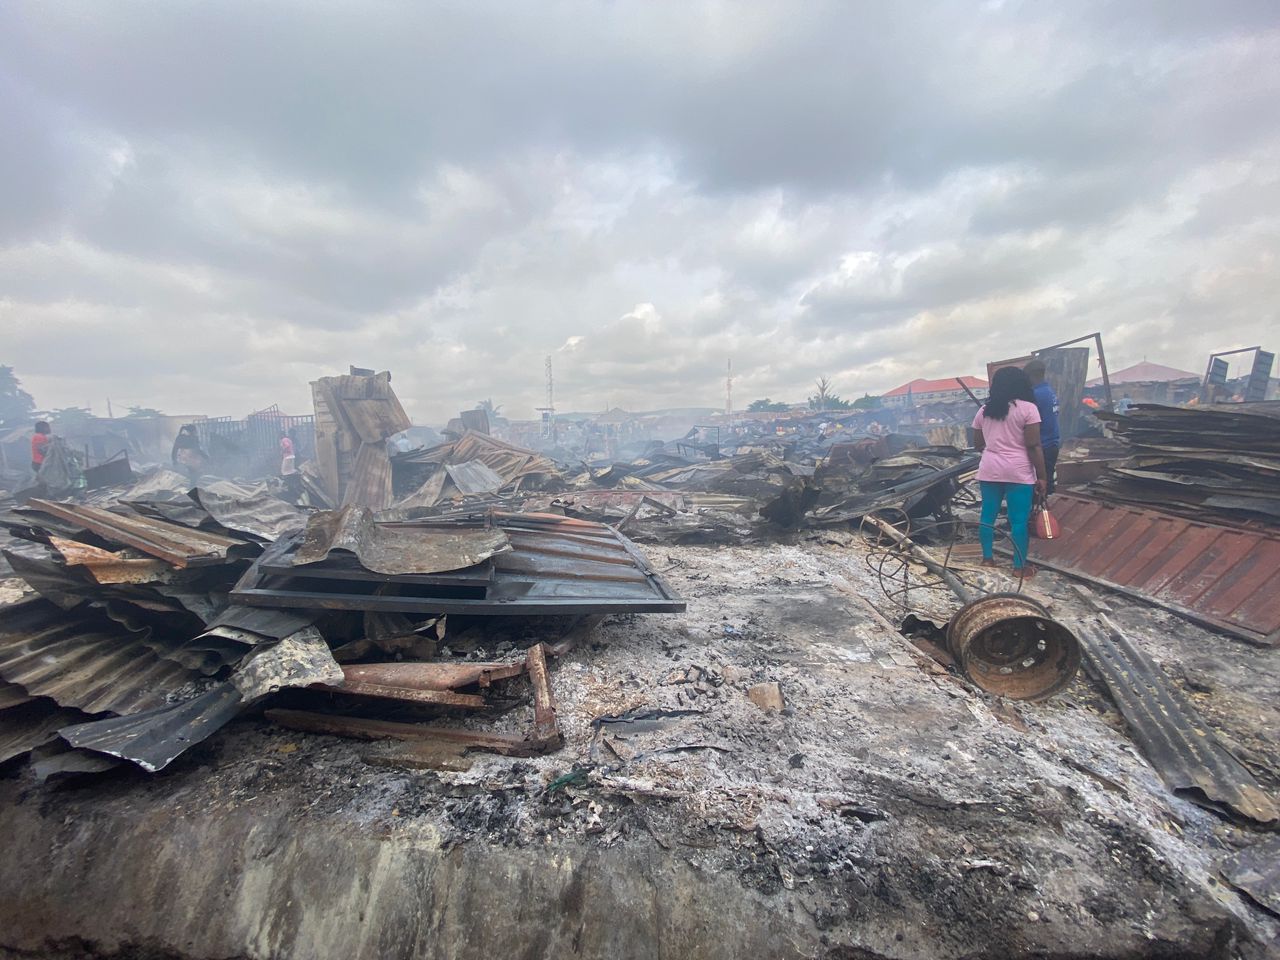 Aftermath of karu market fire